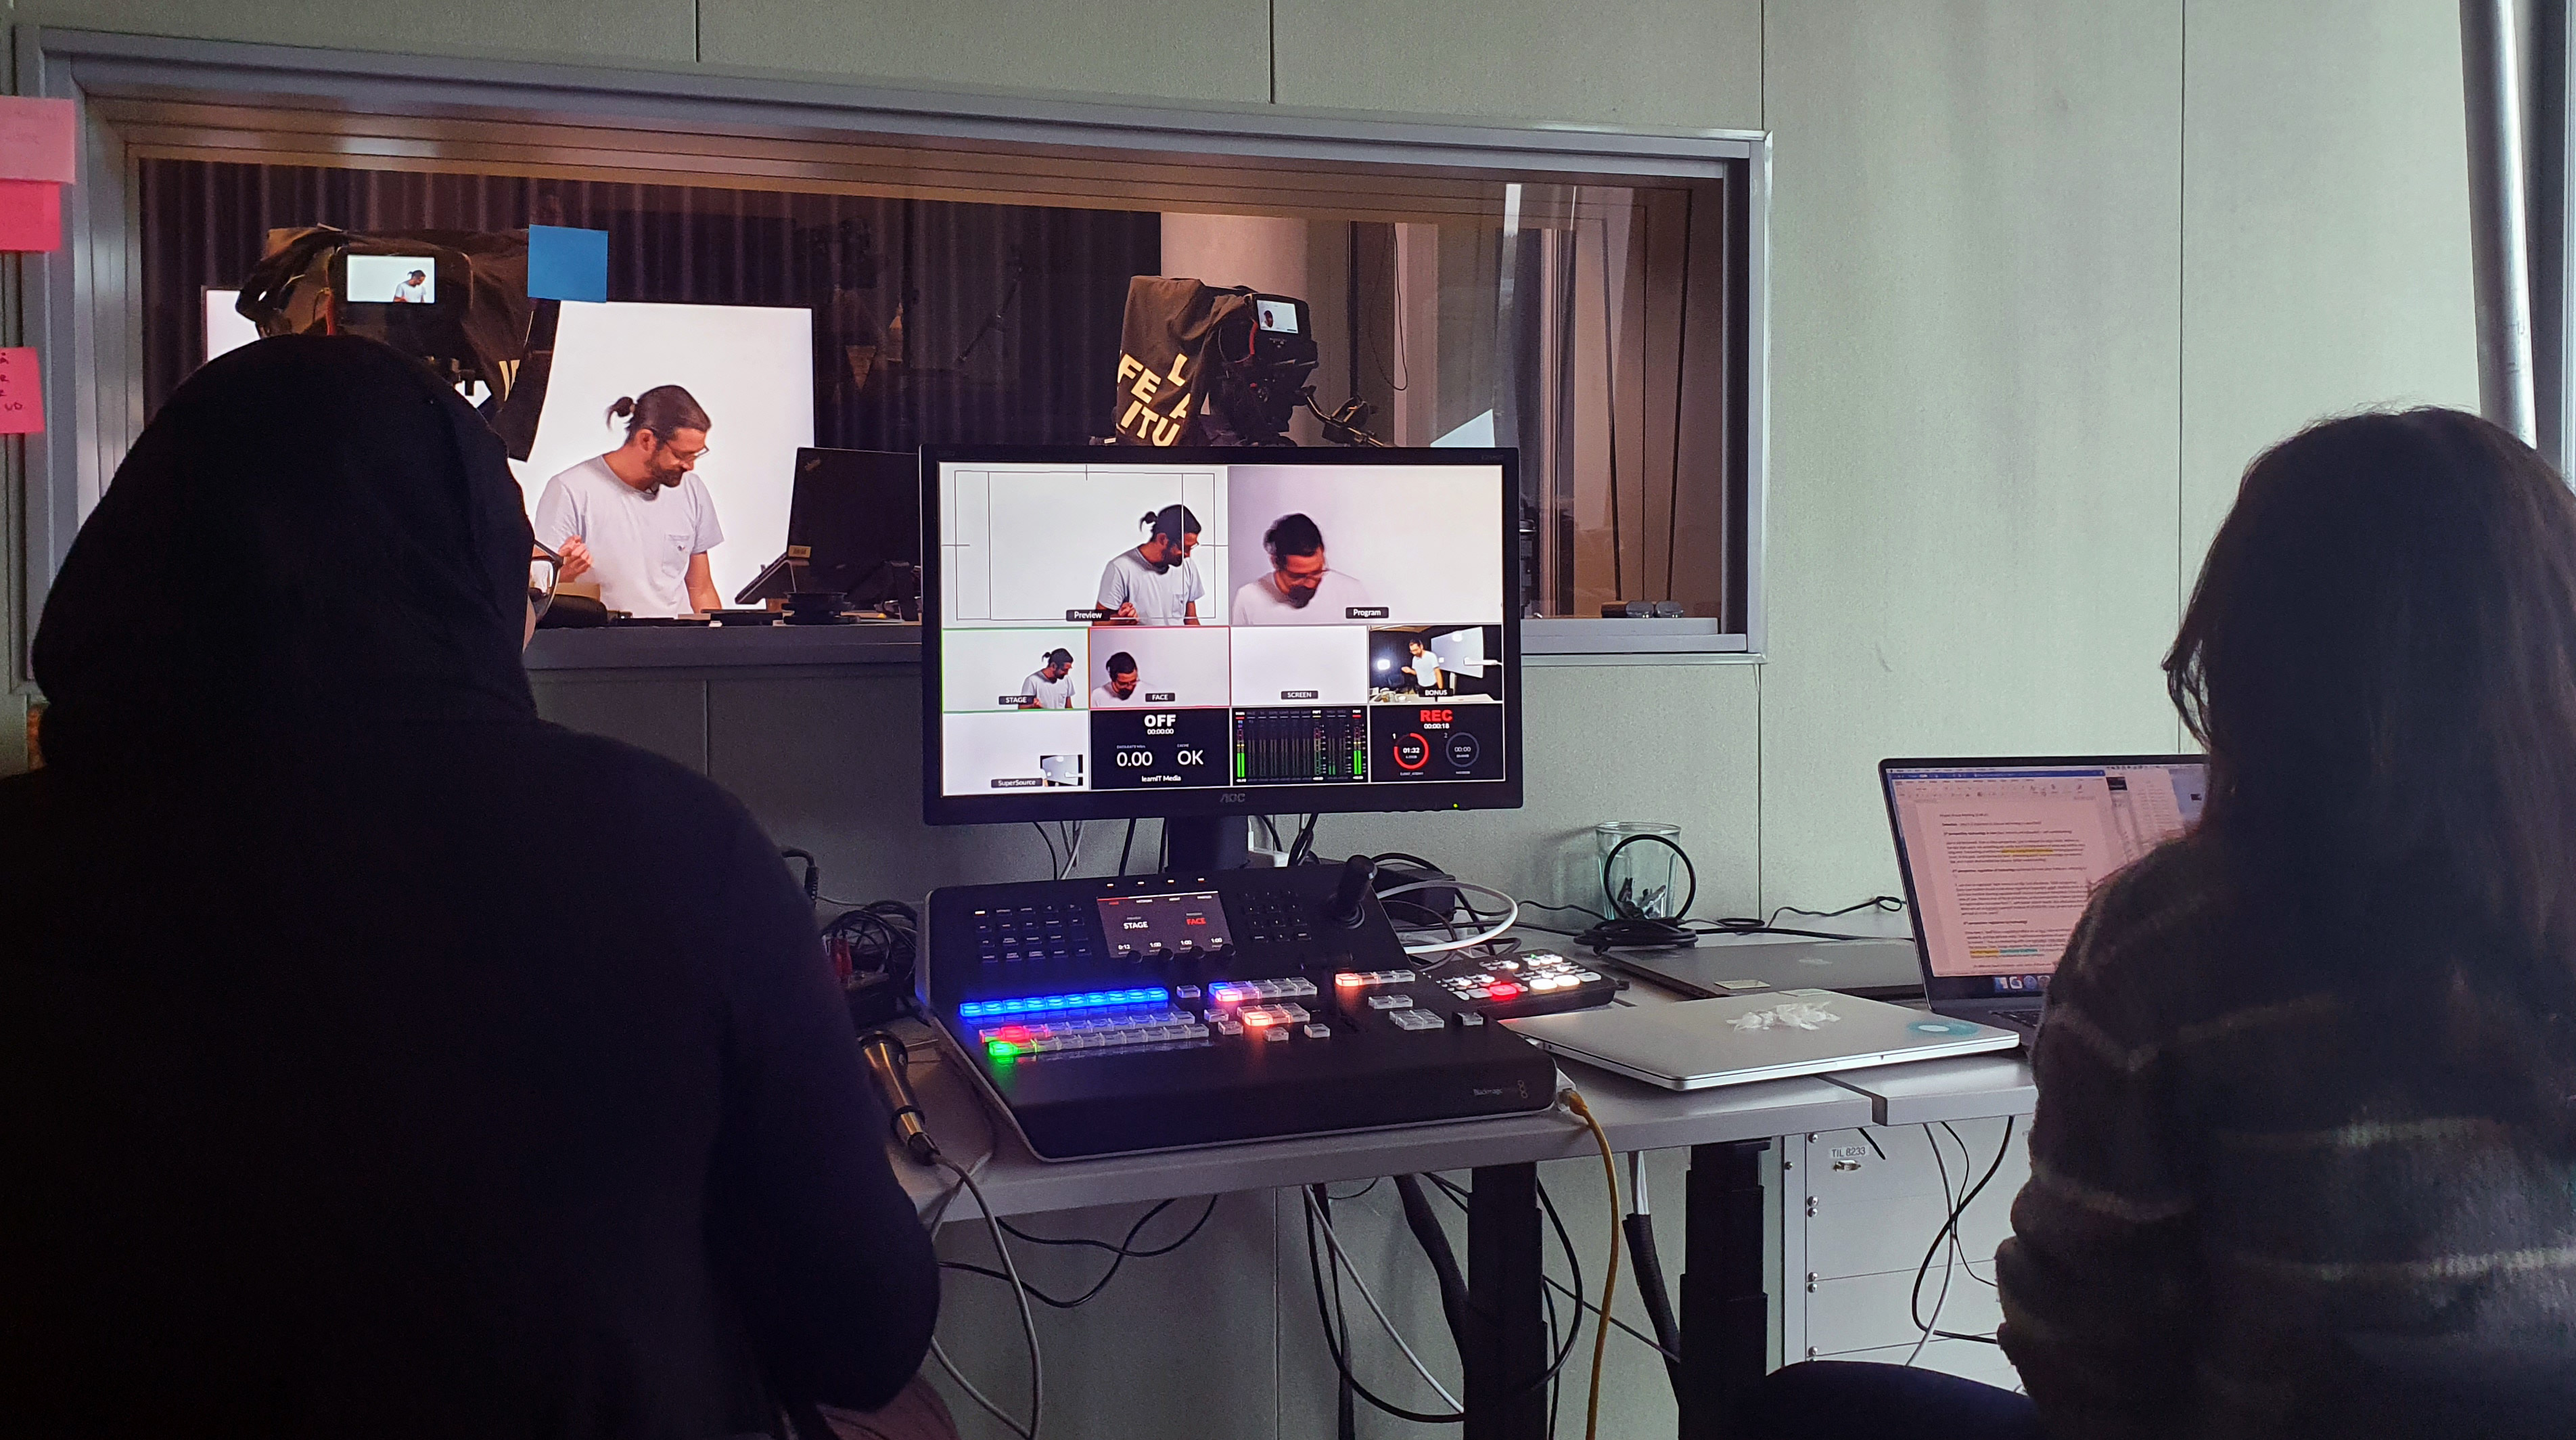 photo of video recording studio with 3 people